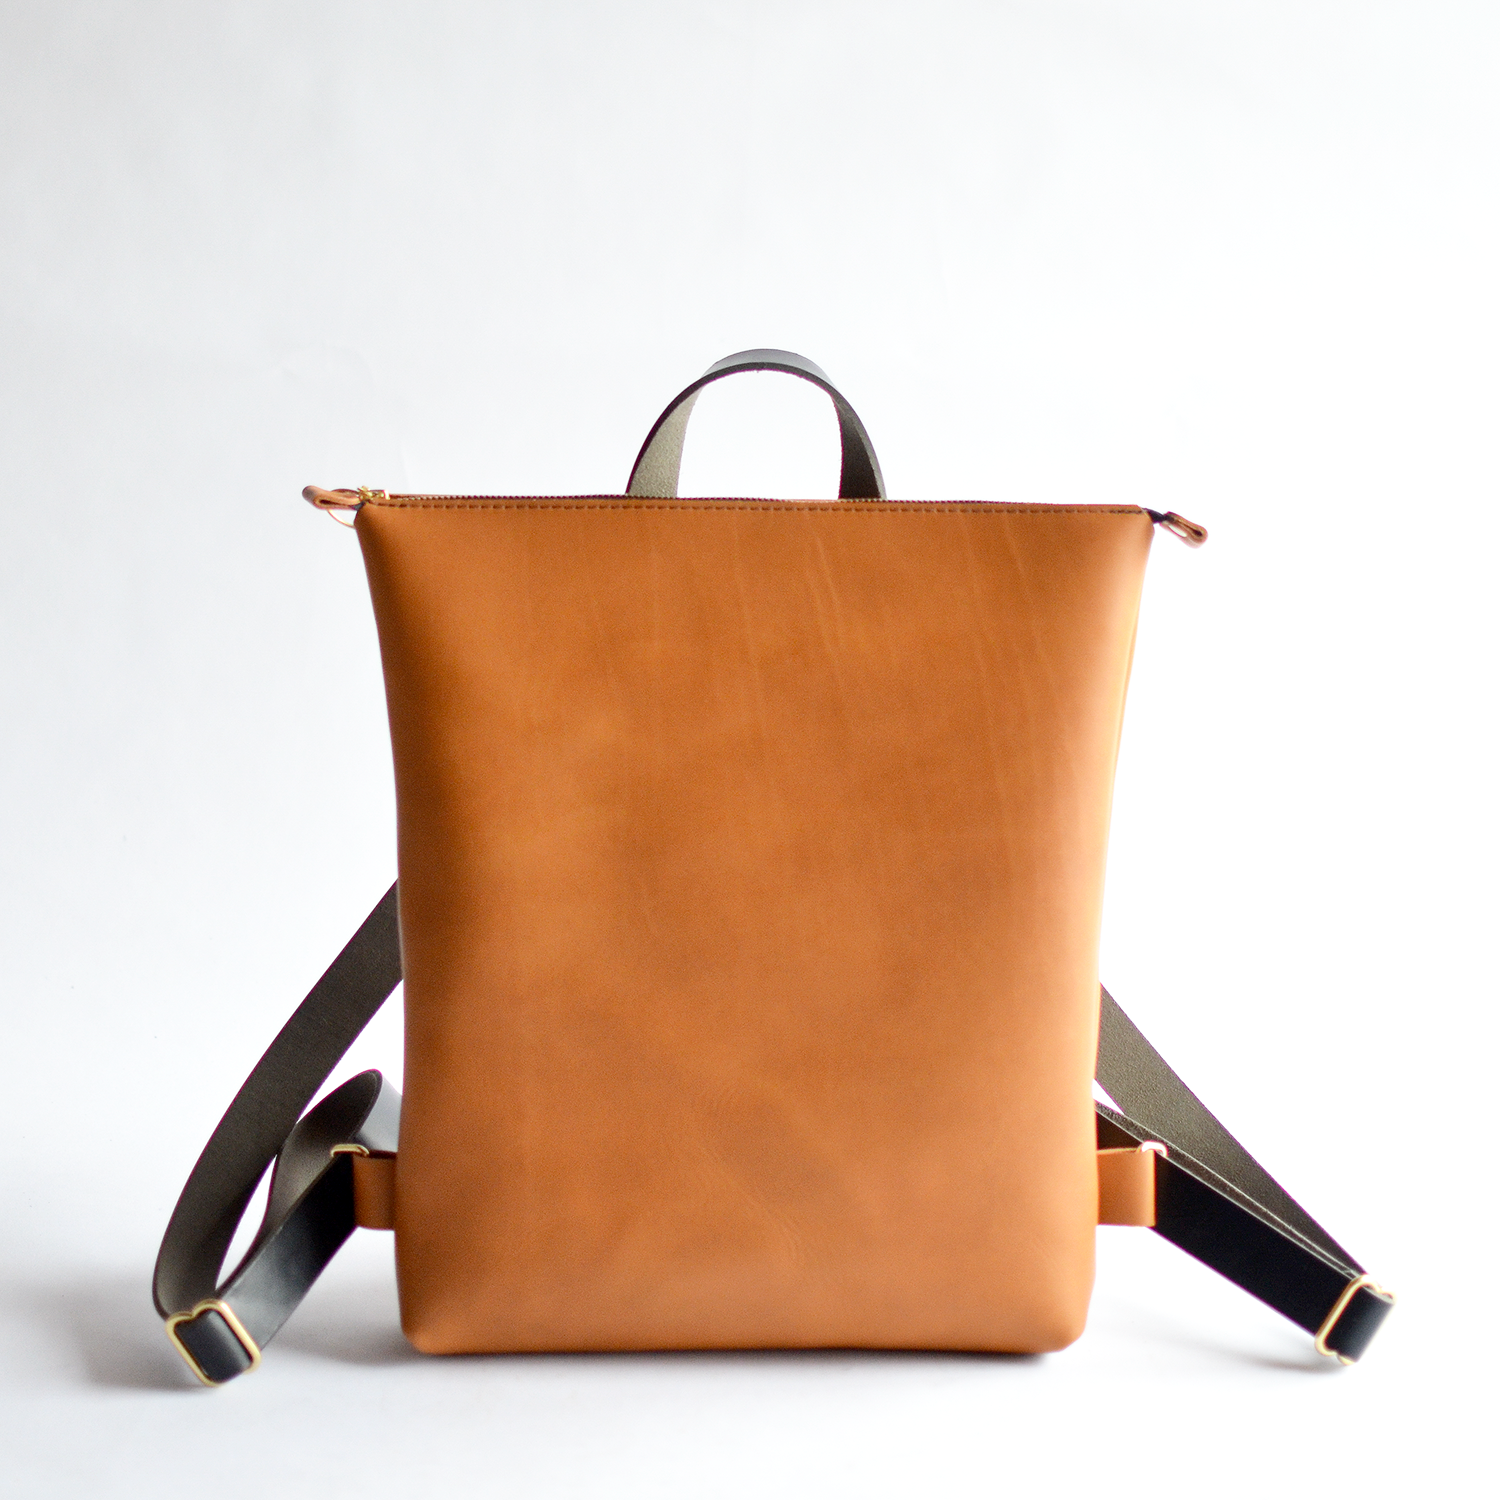 Samsonite Classic Leather Slim Backpack